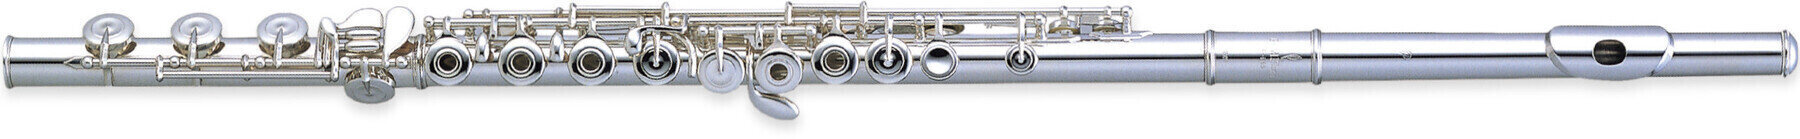 Concert flute Pearl Flute F665E Concert flute